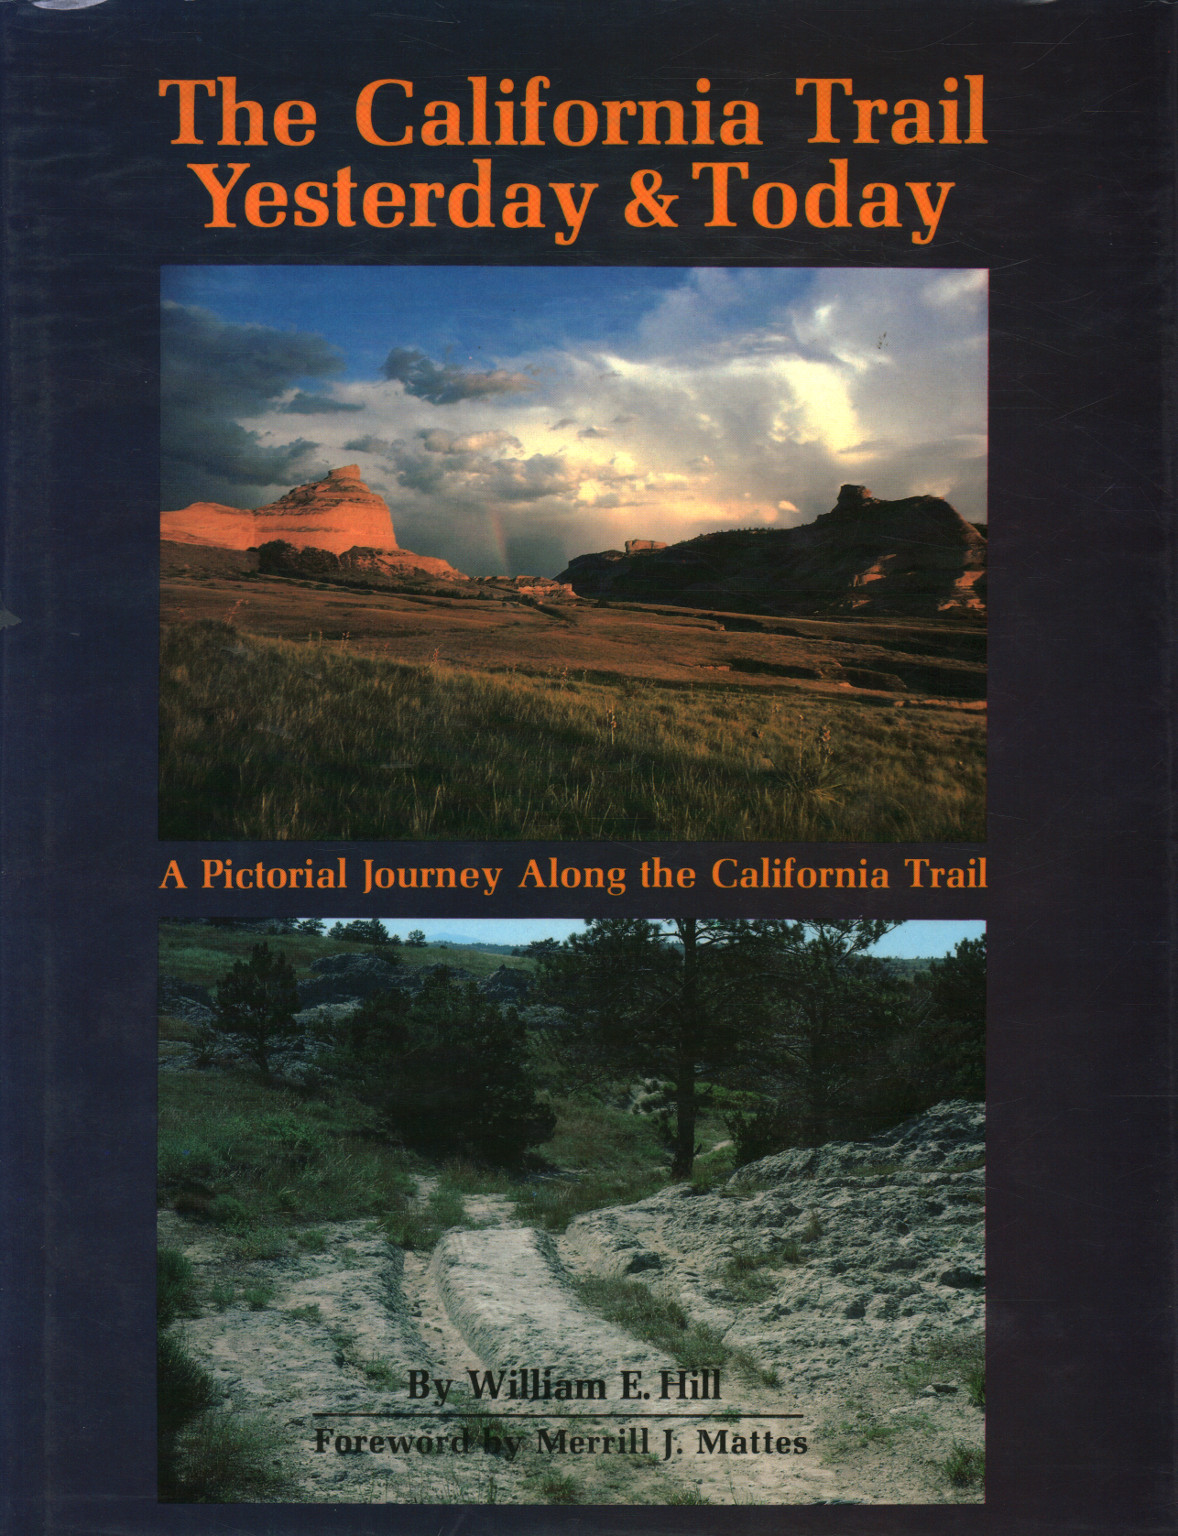 The California Trail Yesterday & Today, William E. Hill